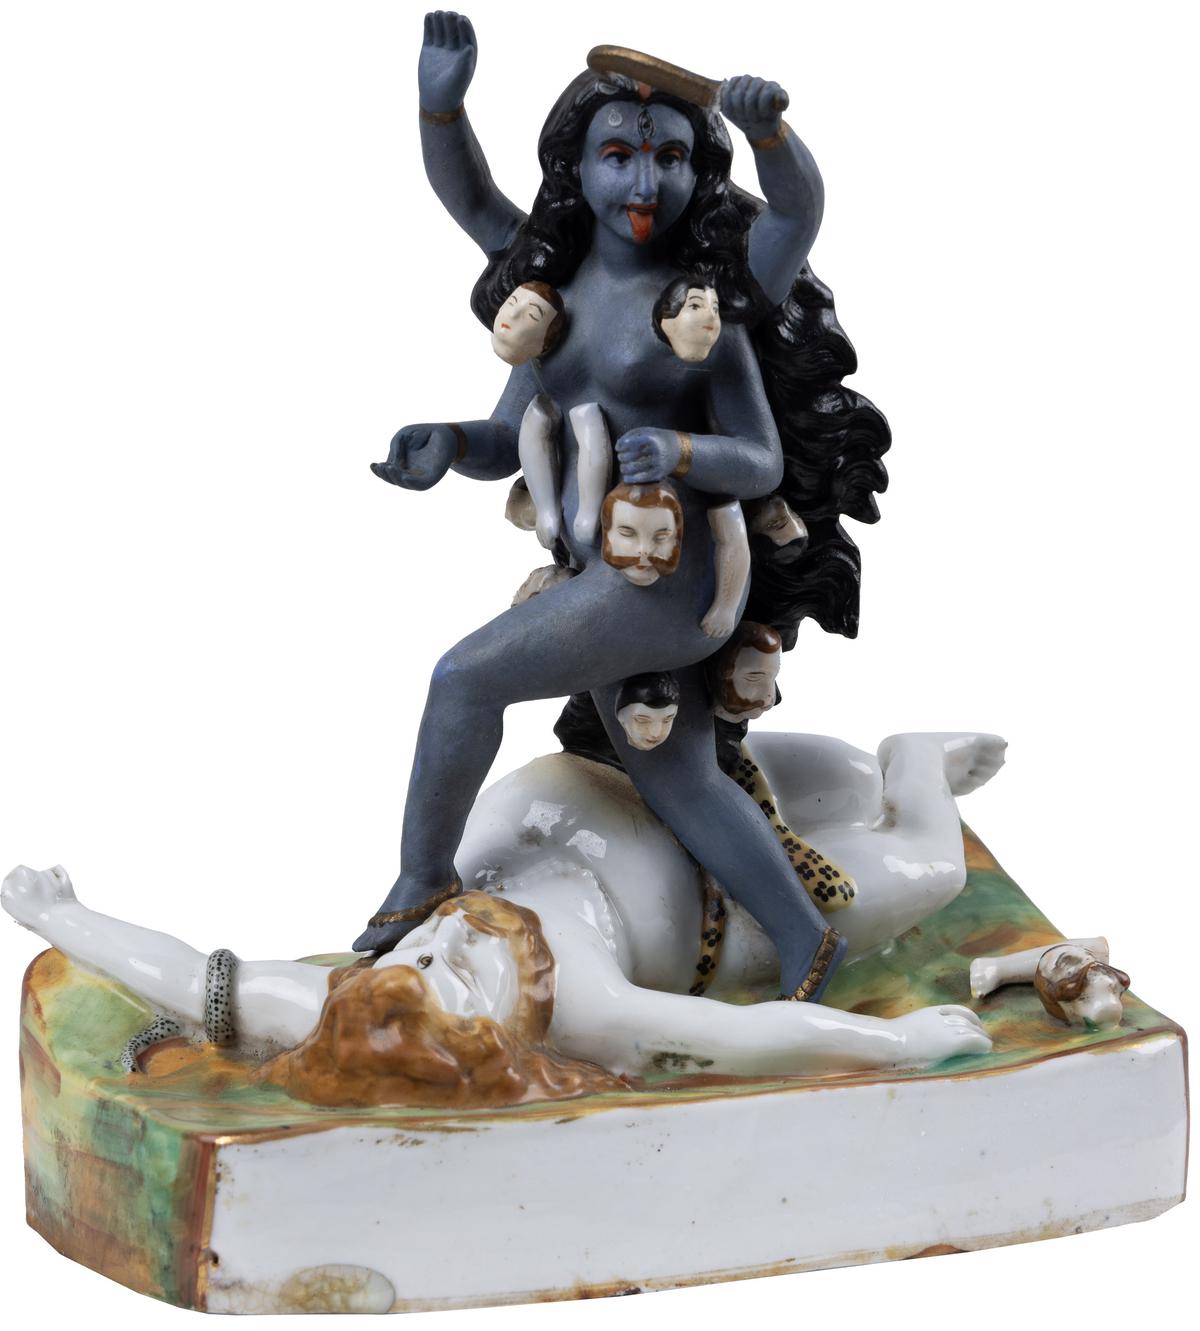 A Dakshinakali sculpture in German porcelain by an unidentified artist